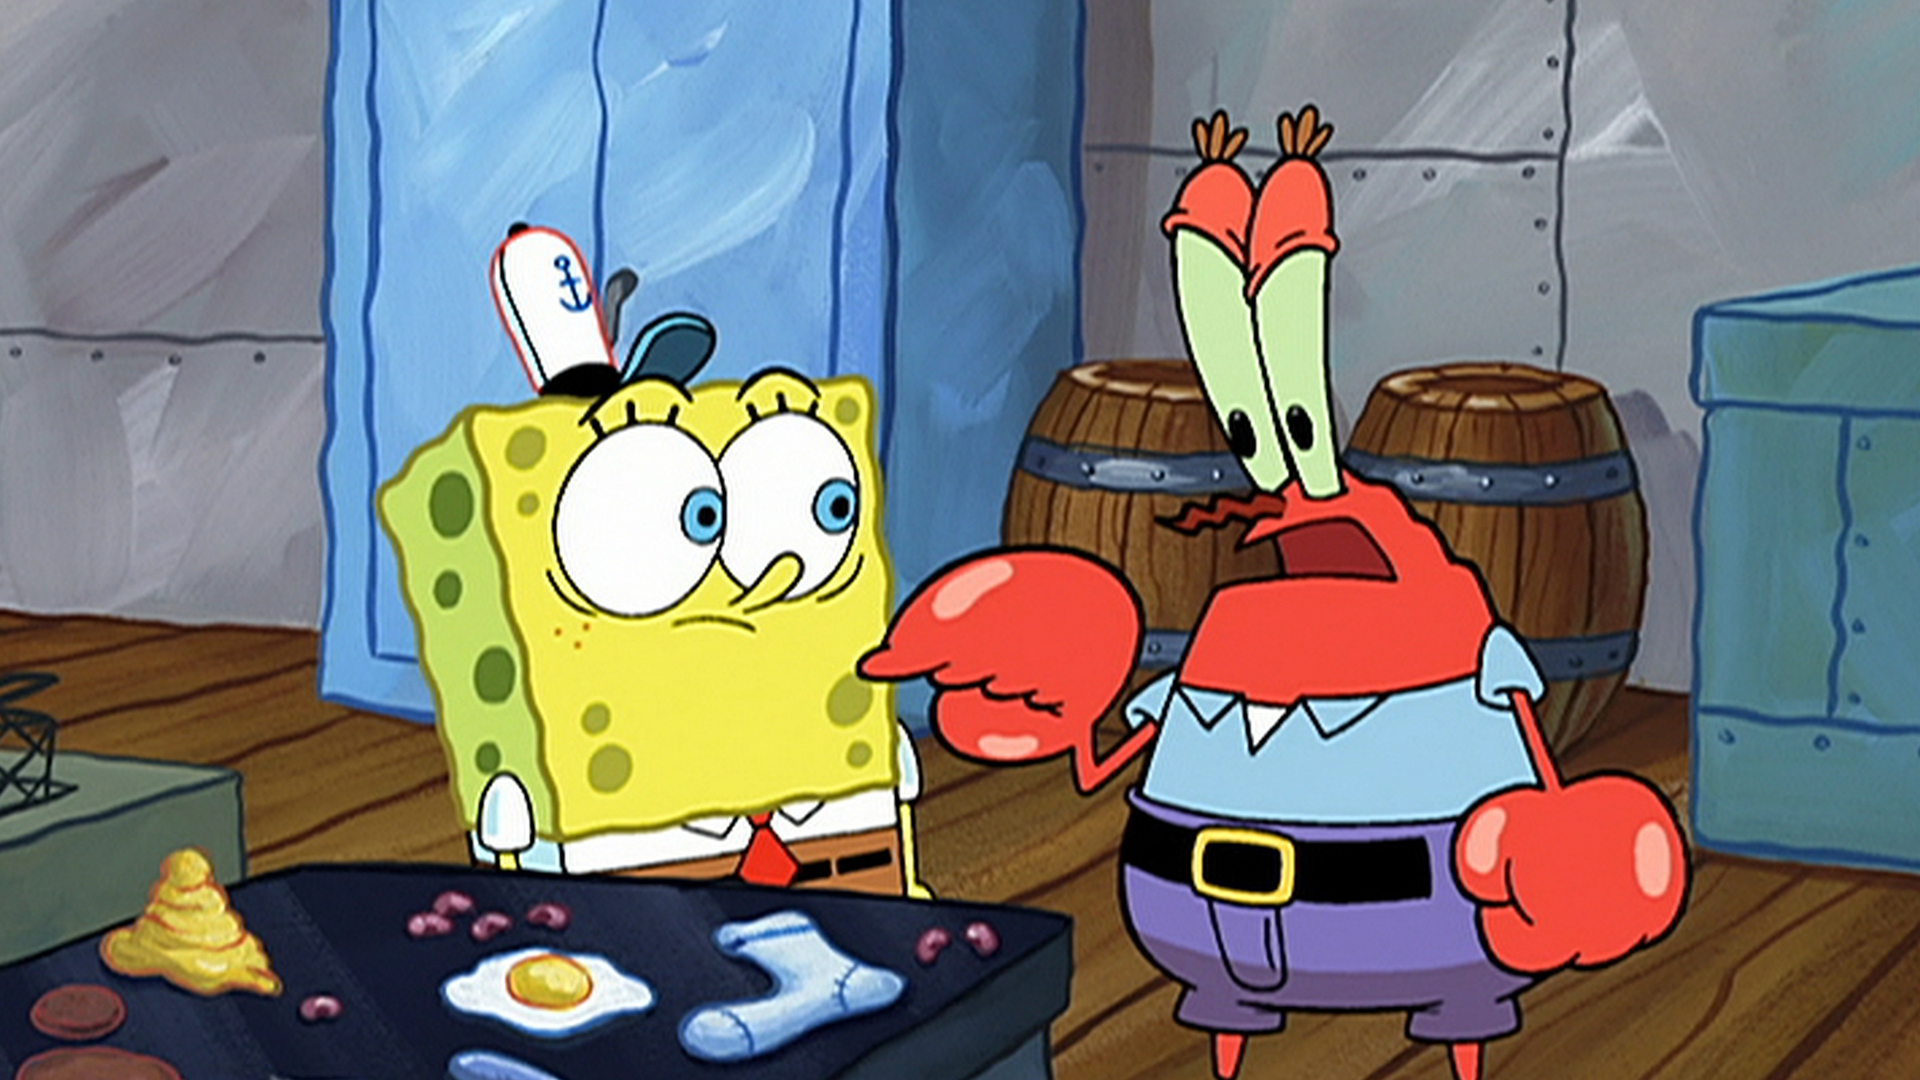 spongebob squarepants season 1 episode 1 full episode free